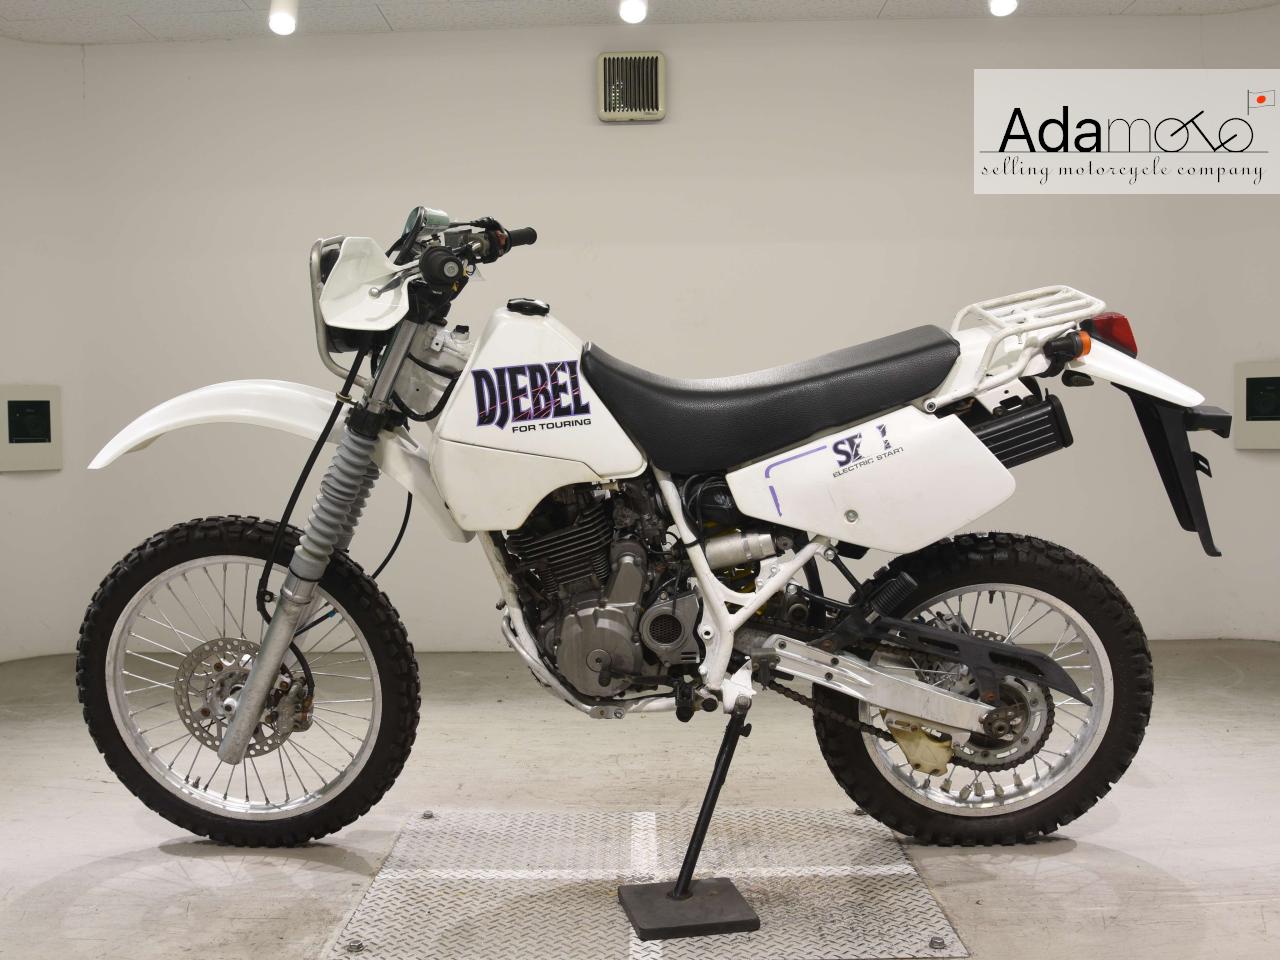 Suzuki DJEBEL250 - Adamoto - Motorcycles from Japan